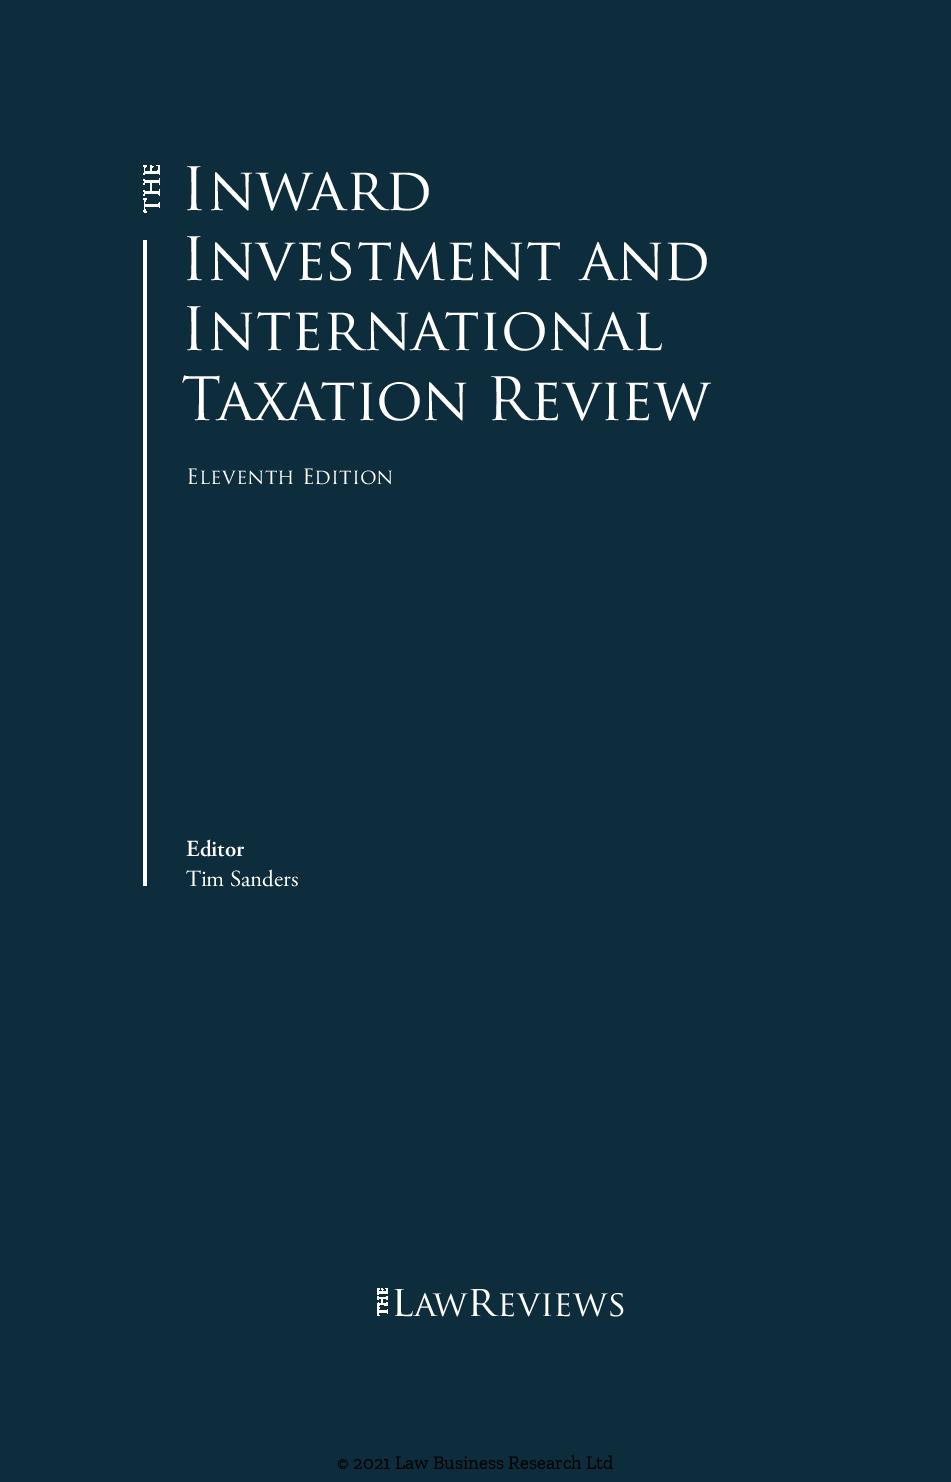 Patrikios Pavlou & Associates LLC: The Inward Investment and International Taxation Review